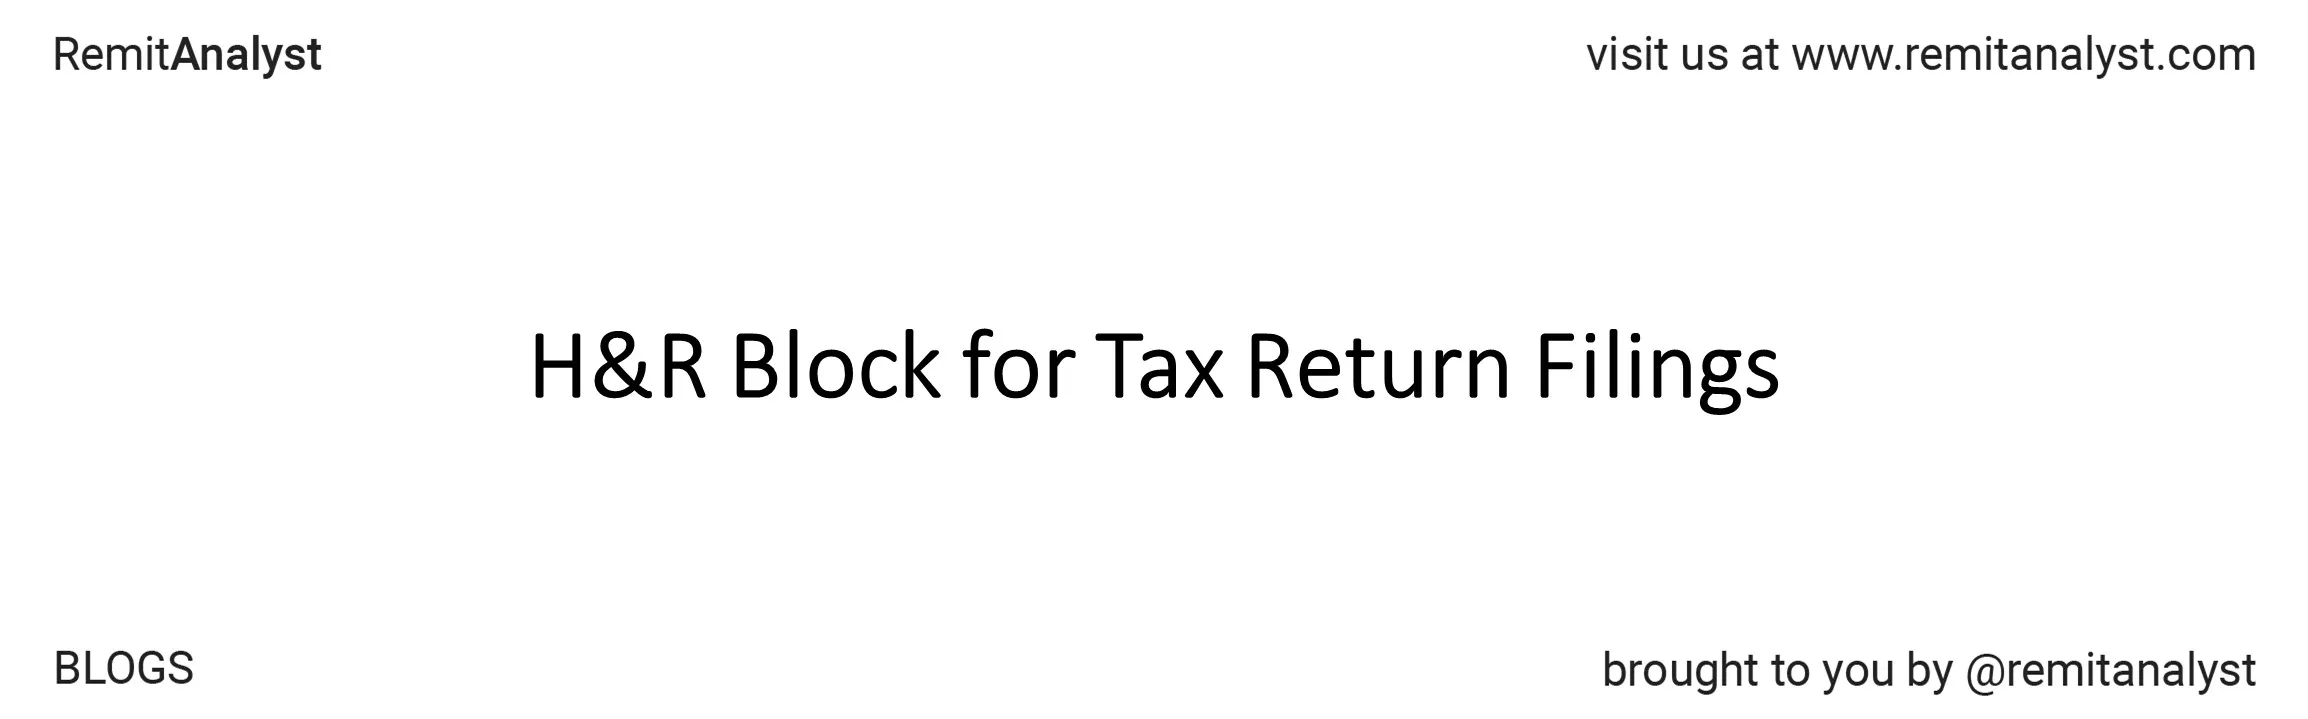 hrblock-for-tax-return-filings-title